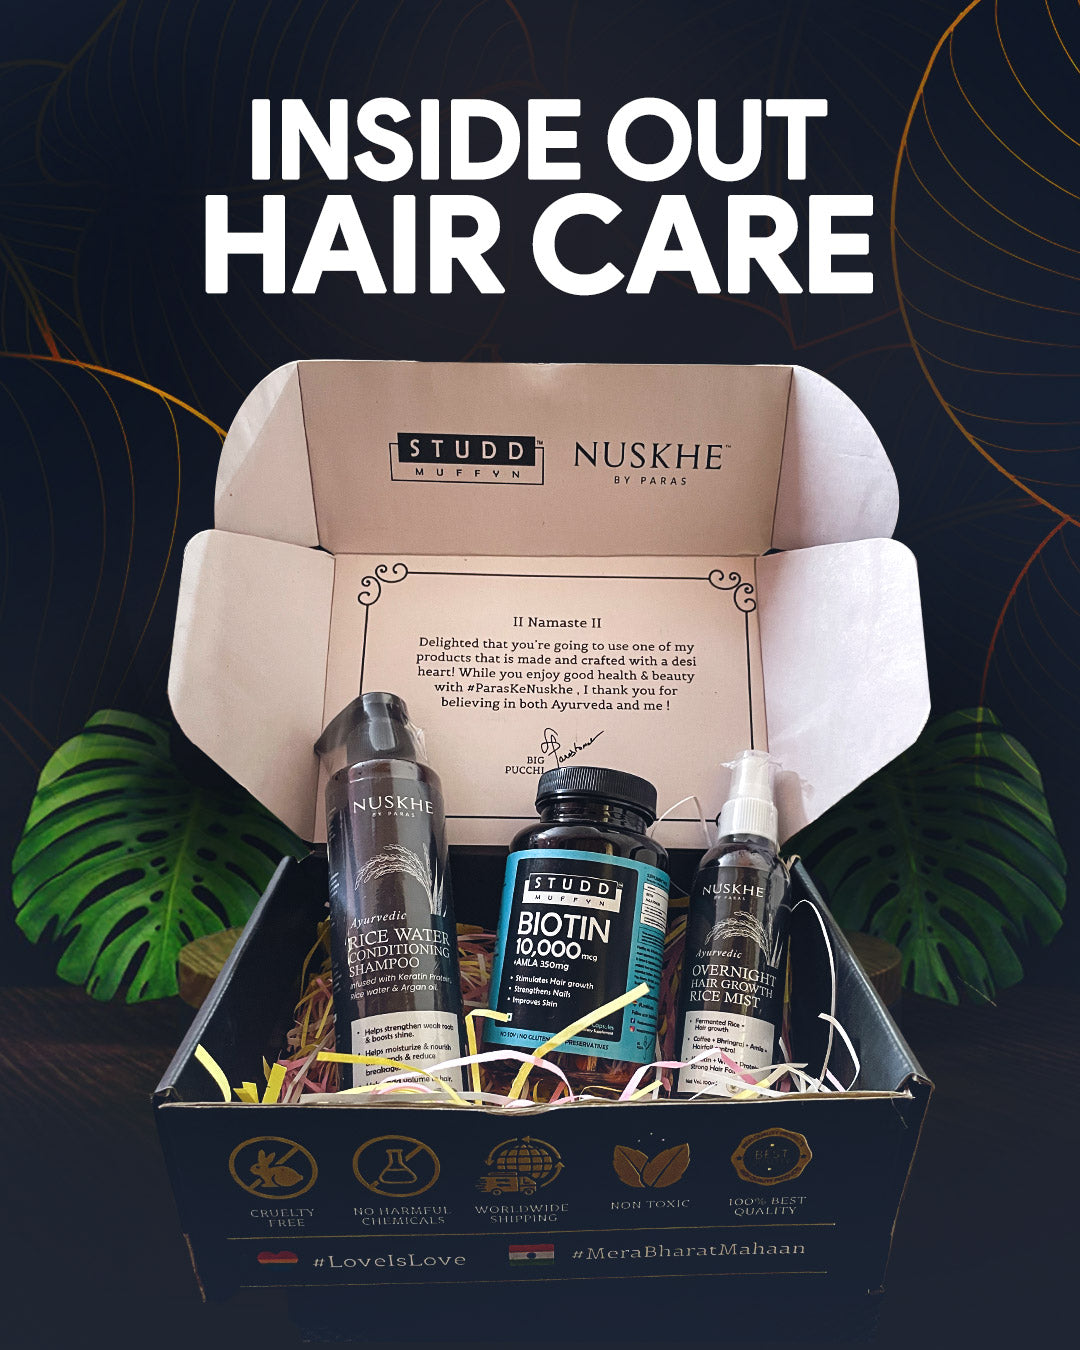 Inside Out Hair Care Combo (Shampoo + Fermented Rice Mist + Biotin Capsules) ✽ For Men & Women